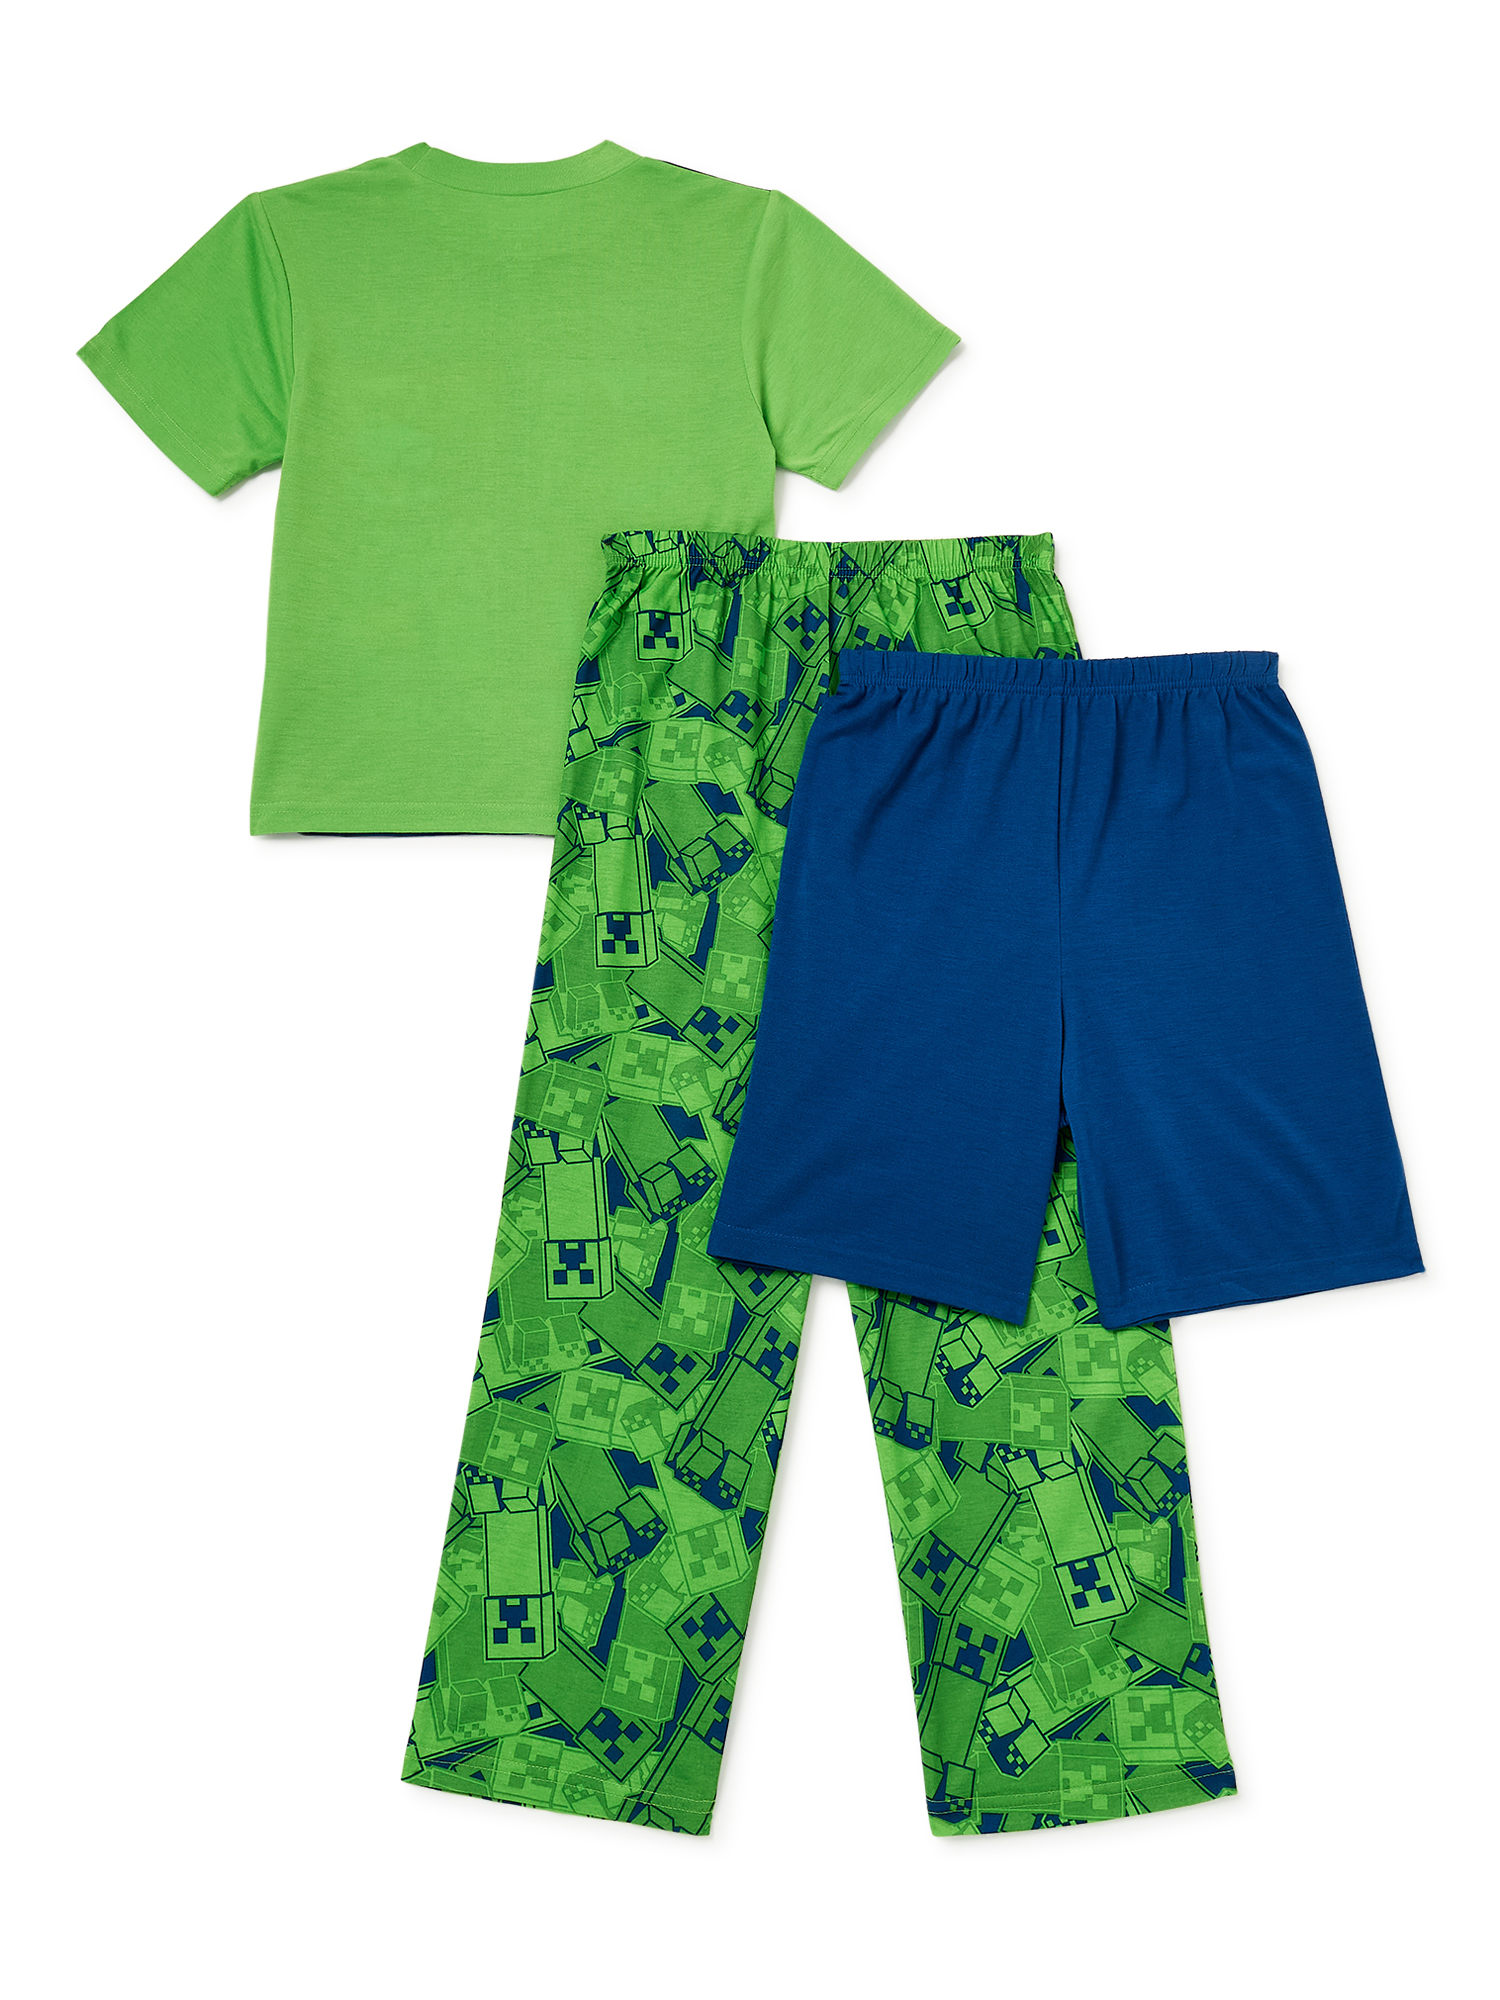 Minecraft Boys Short Sleeve Top, Pants and Shorts, 3-Piece Pajama Set, Sizes 6-12 - image 2 of 3